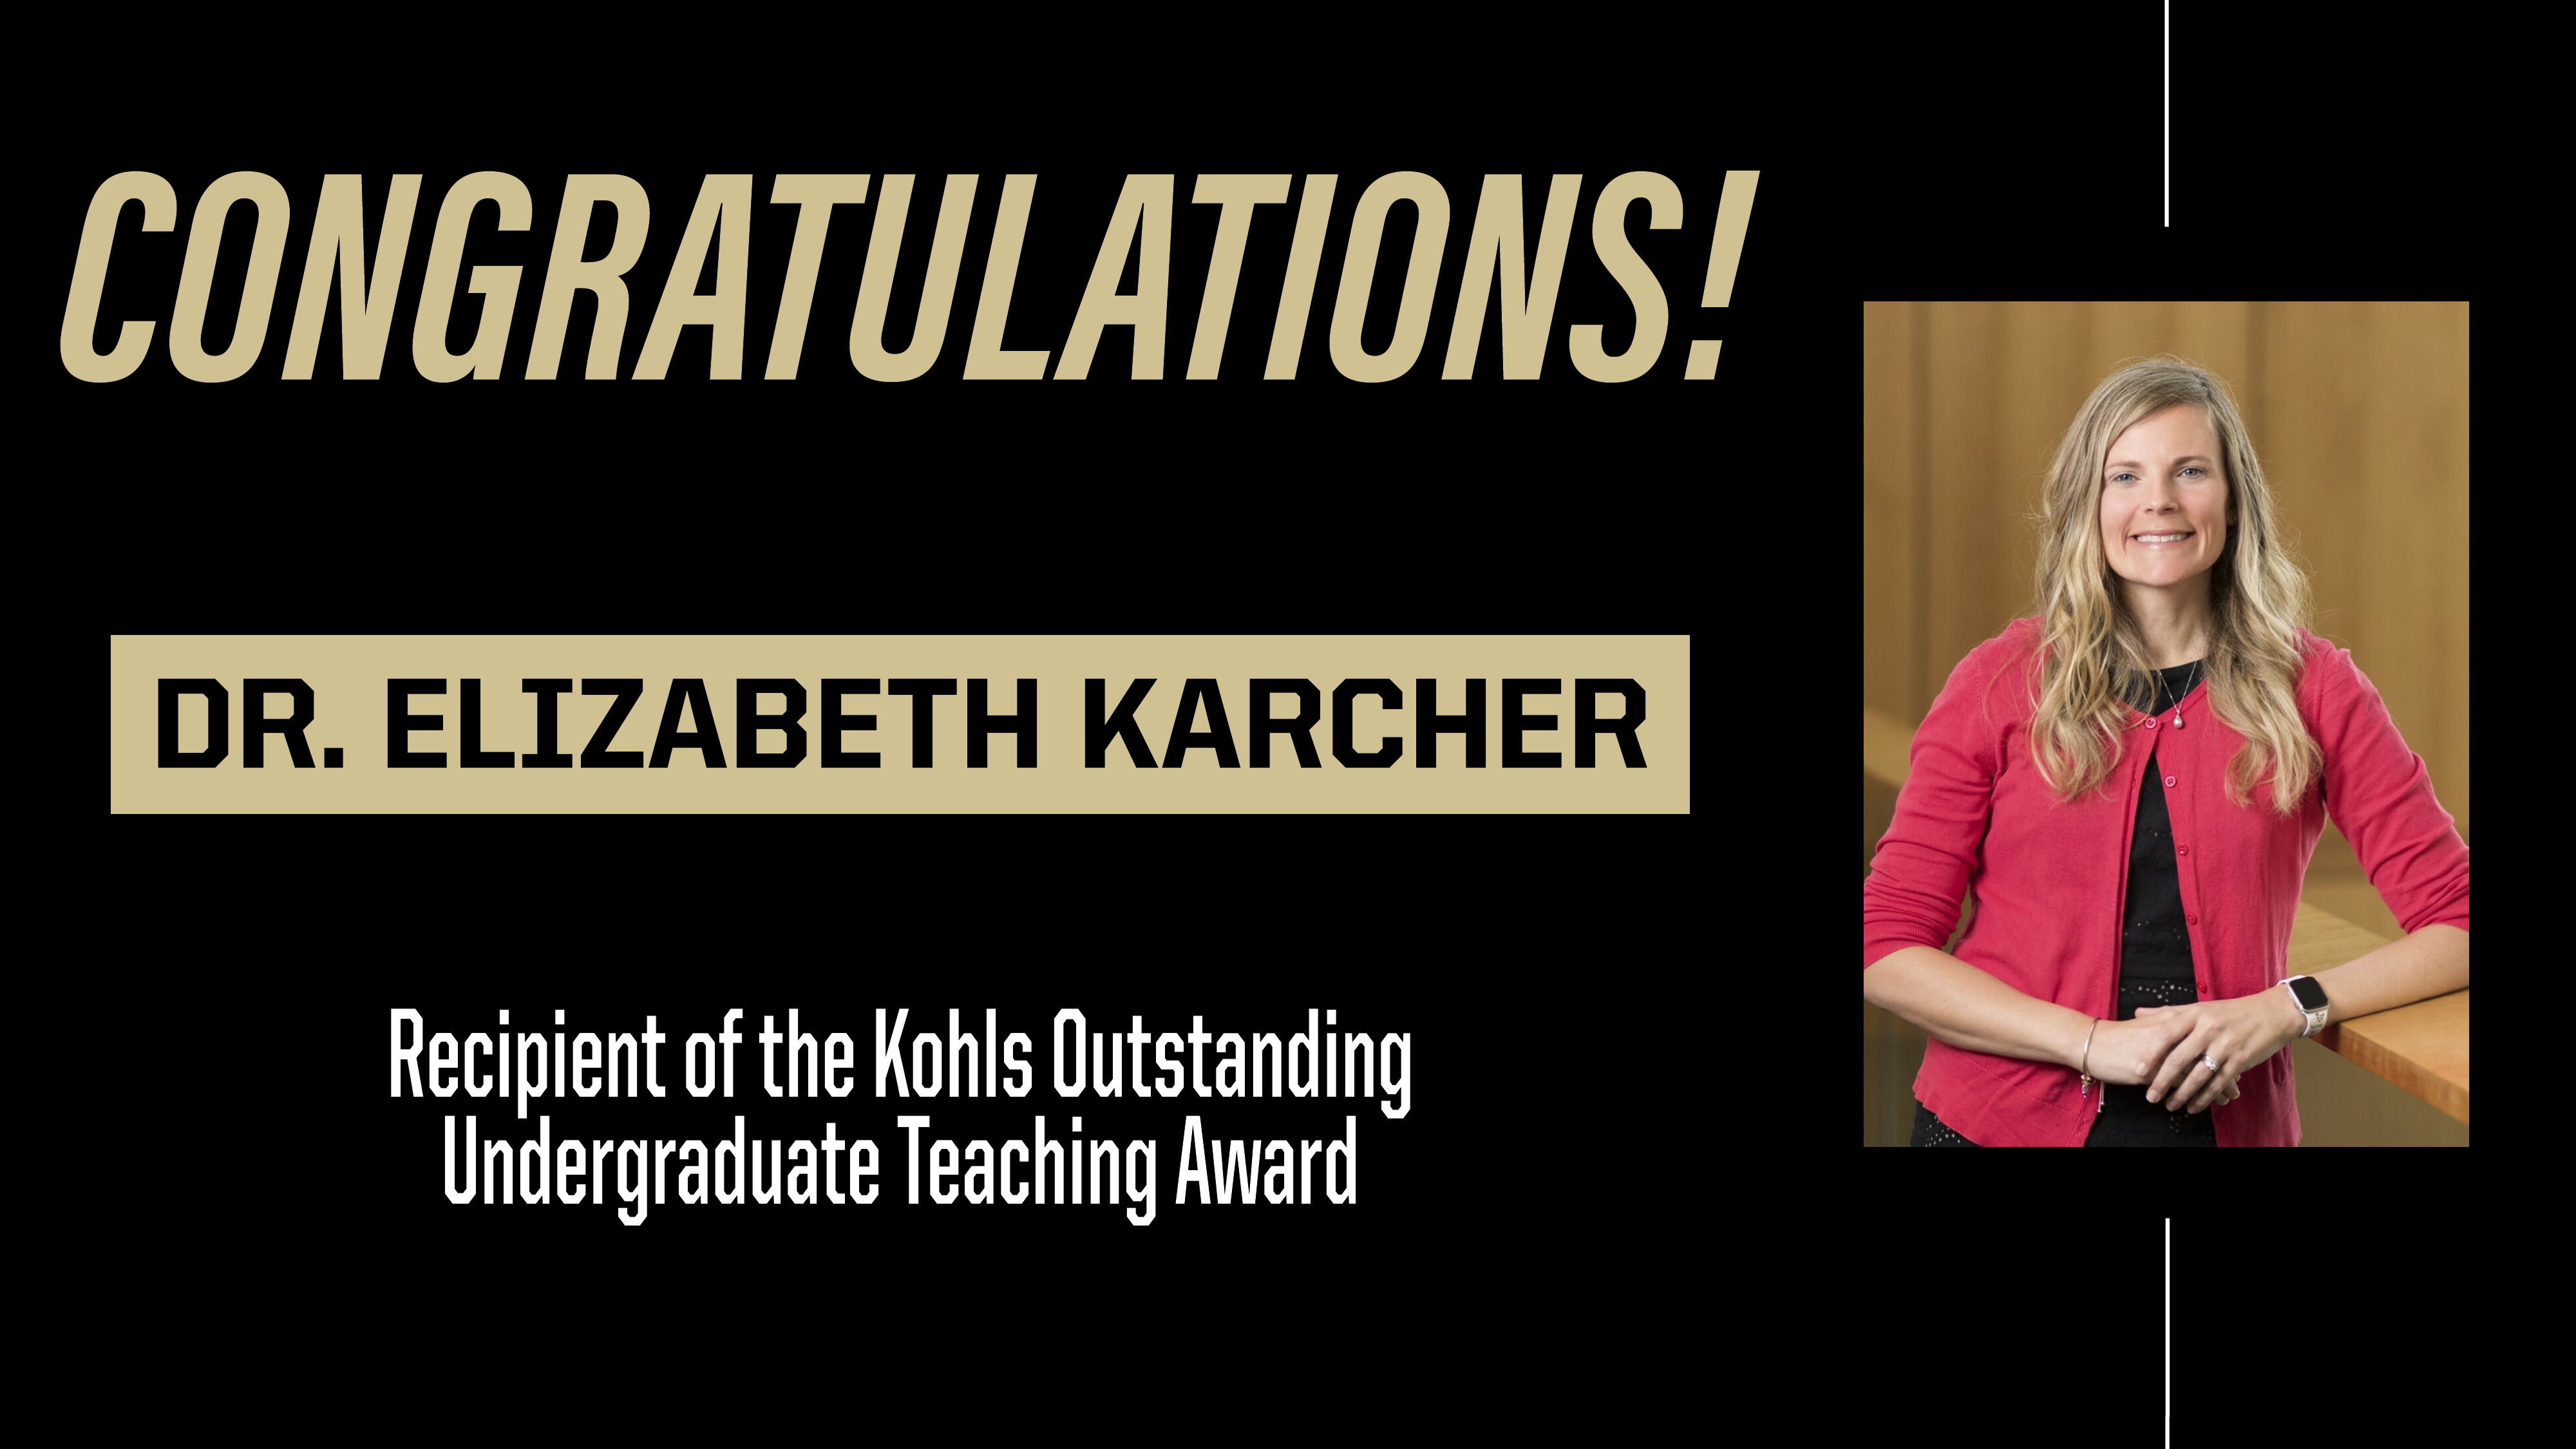 Elizabeth Karcher congratulations slide